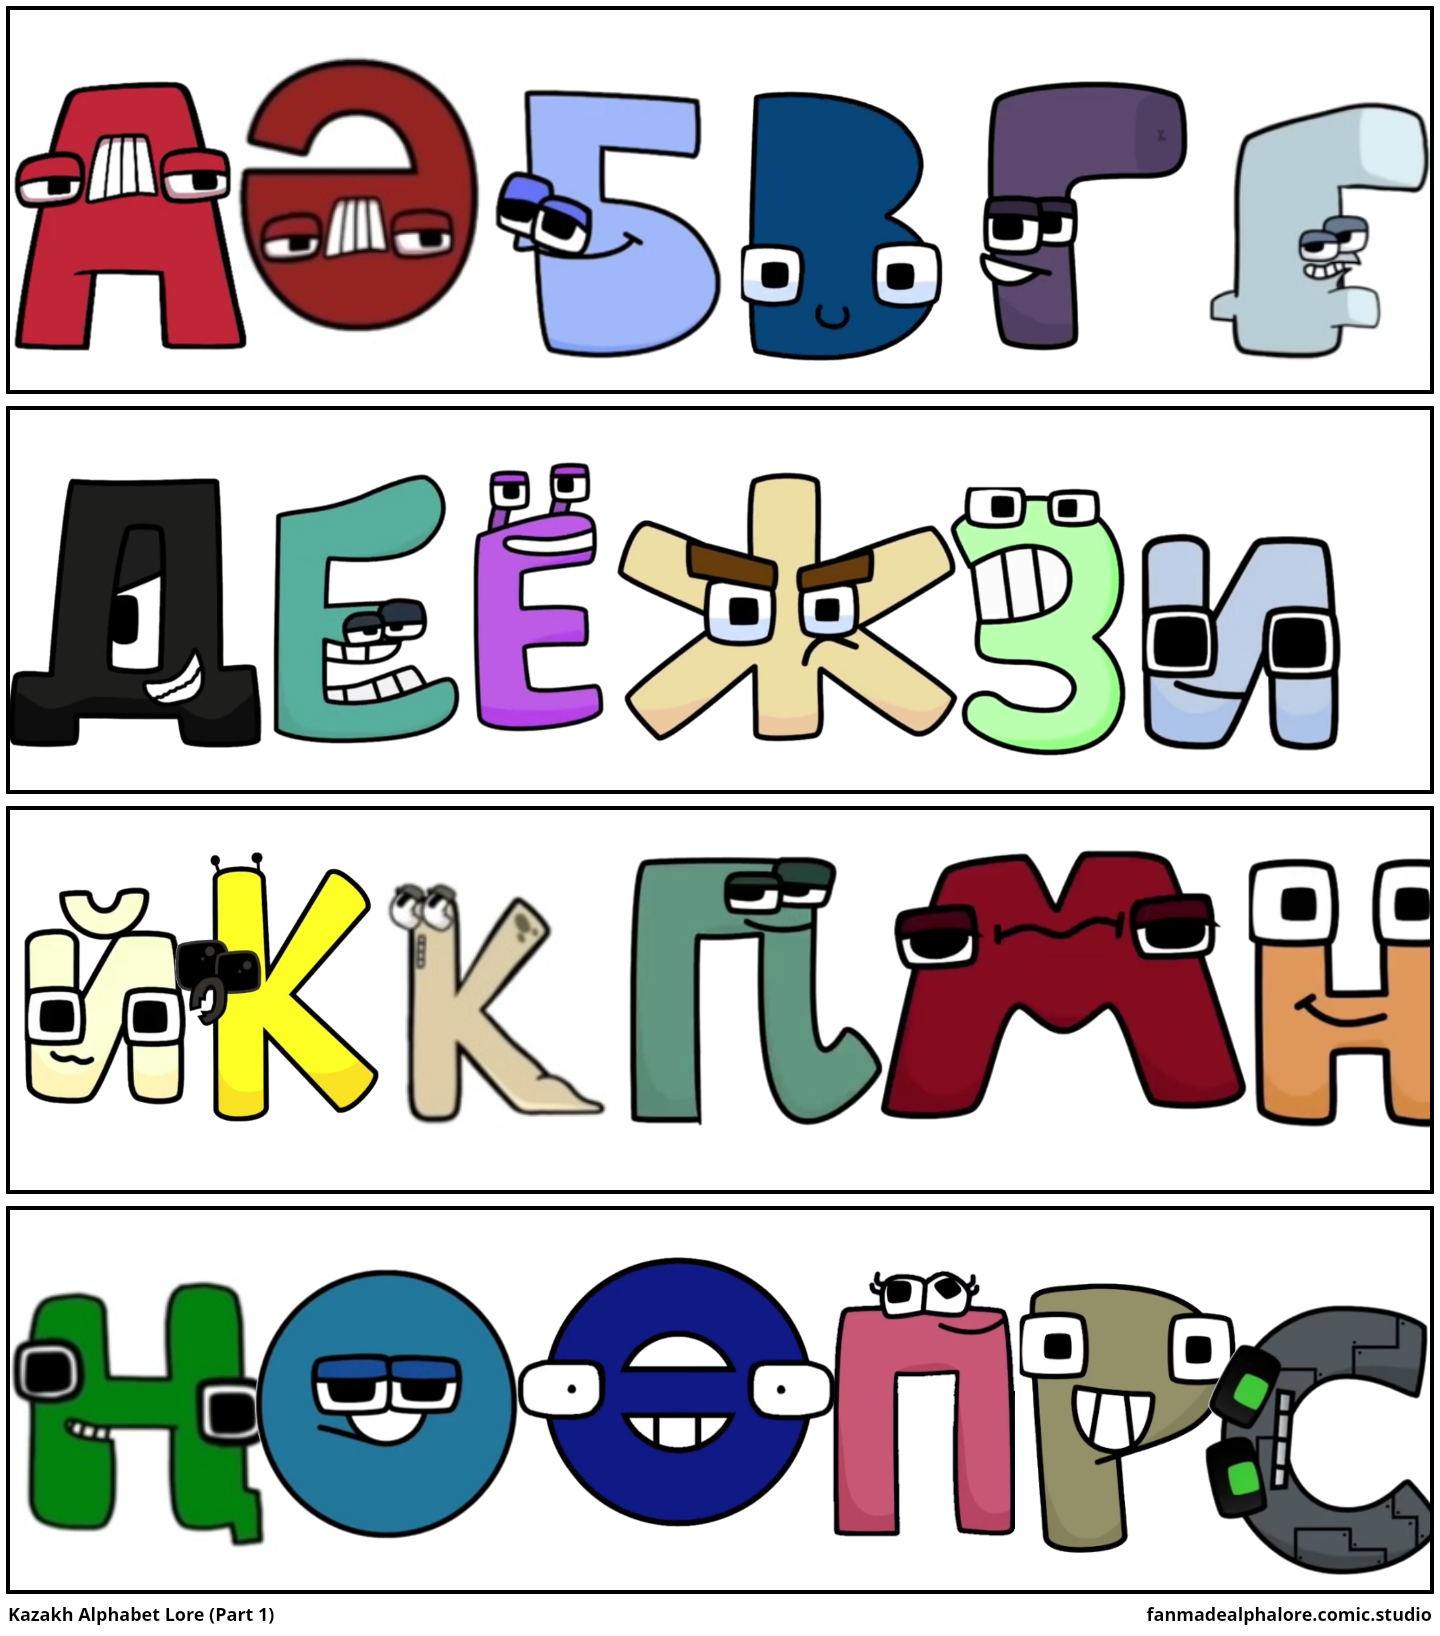 Kazakh Alphabet Lore - Comic Studio